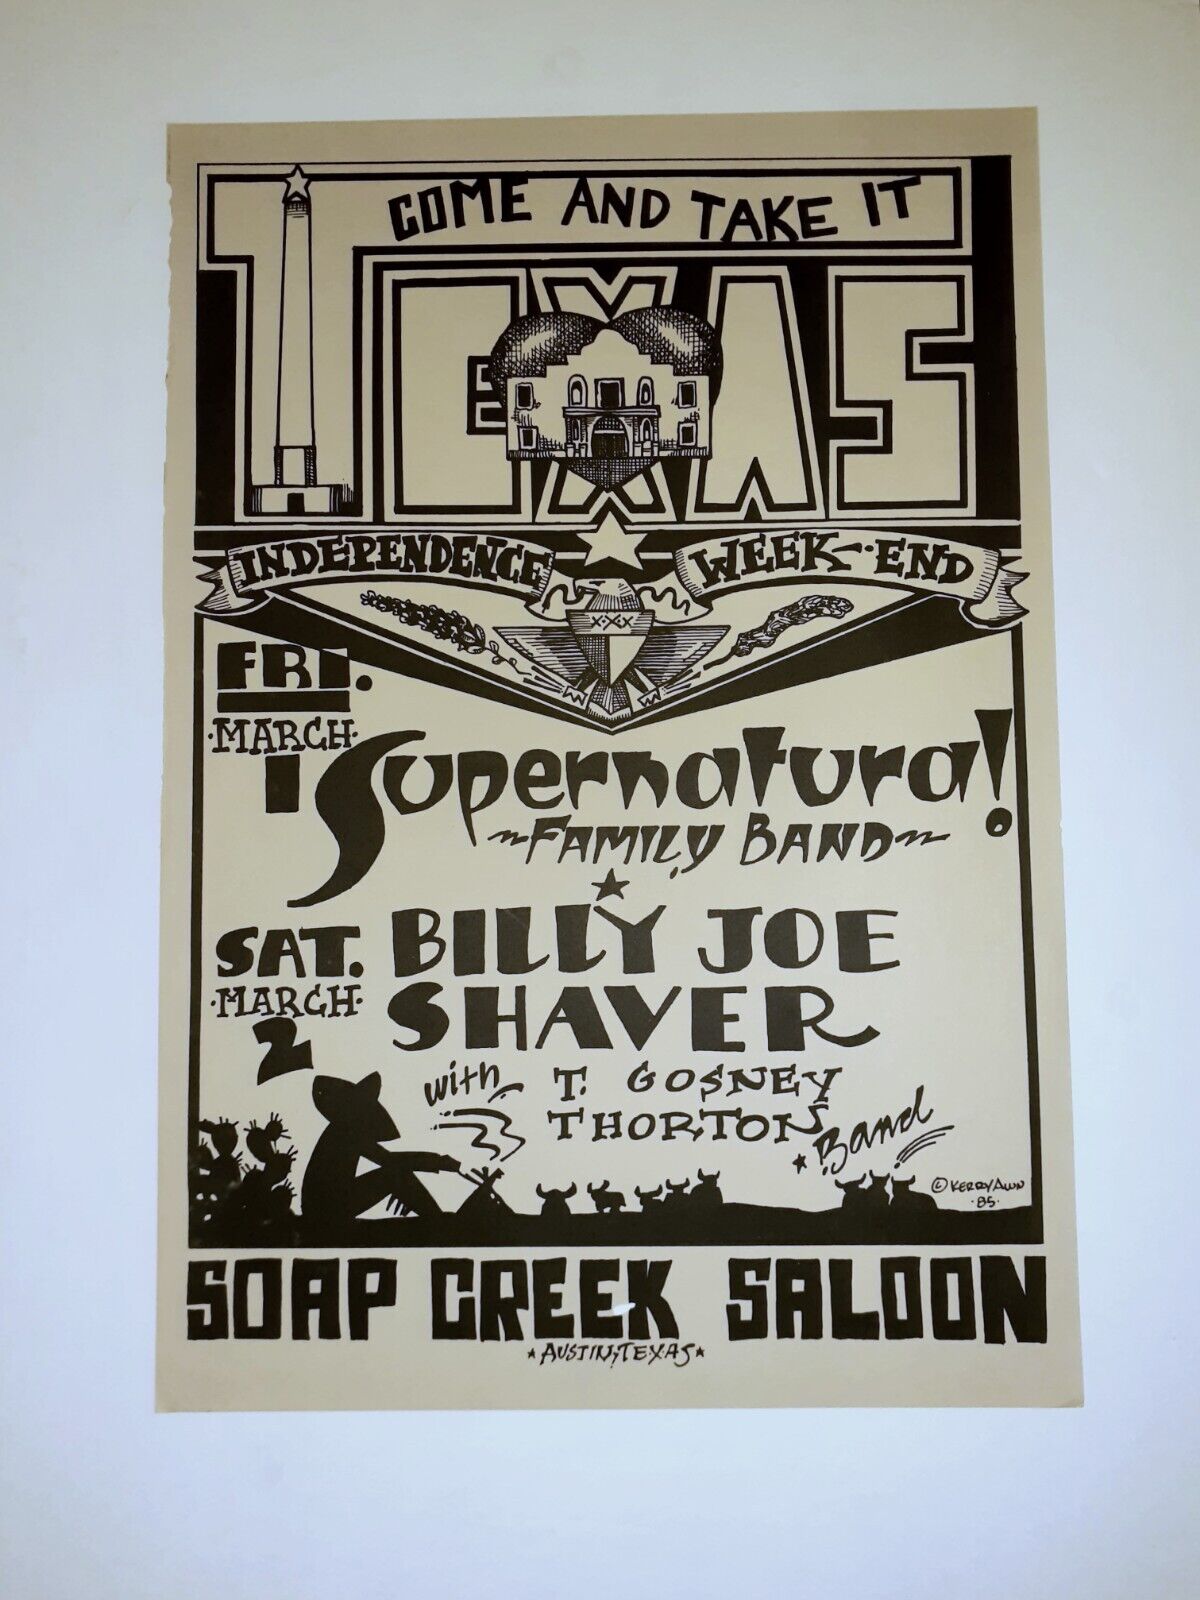 BILLY JOE SHAVER SOAP CREEK SALOON T. Gosney Thorton TEXAS INDEPENDENCE Poster